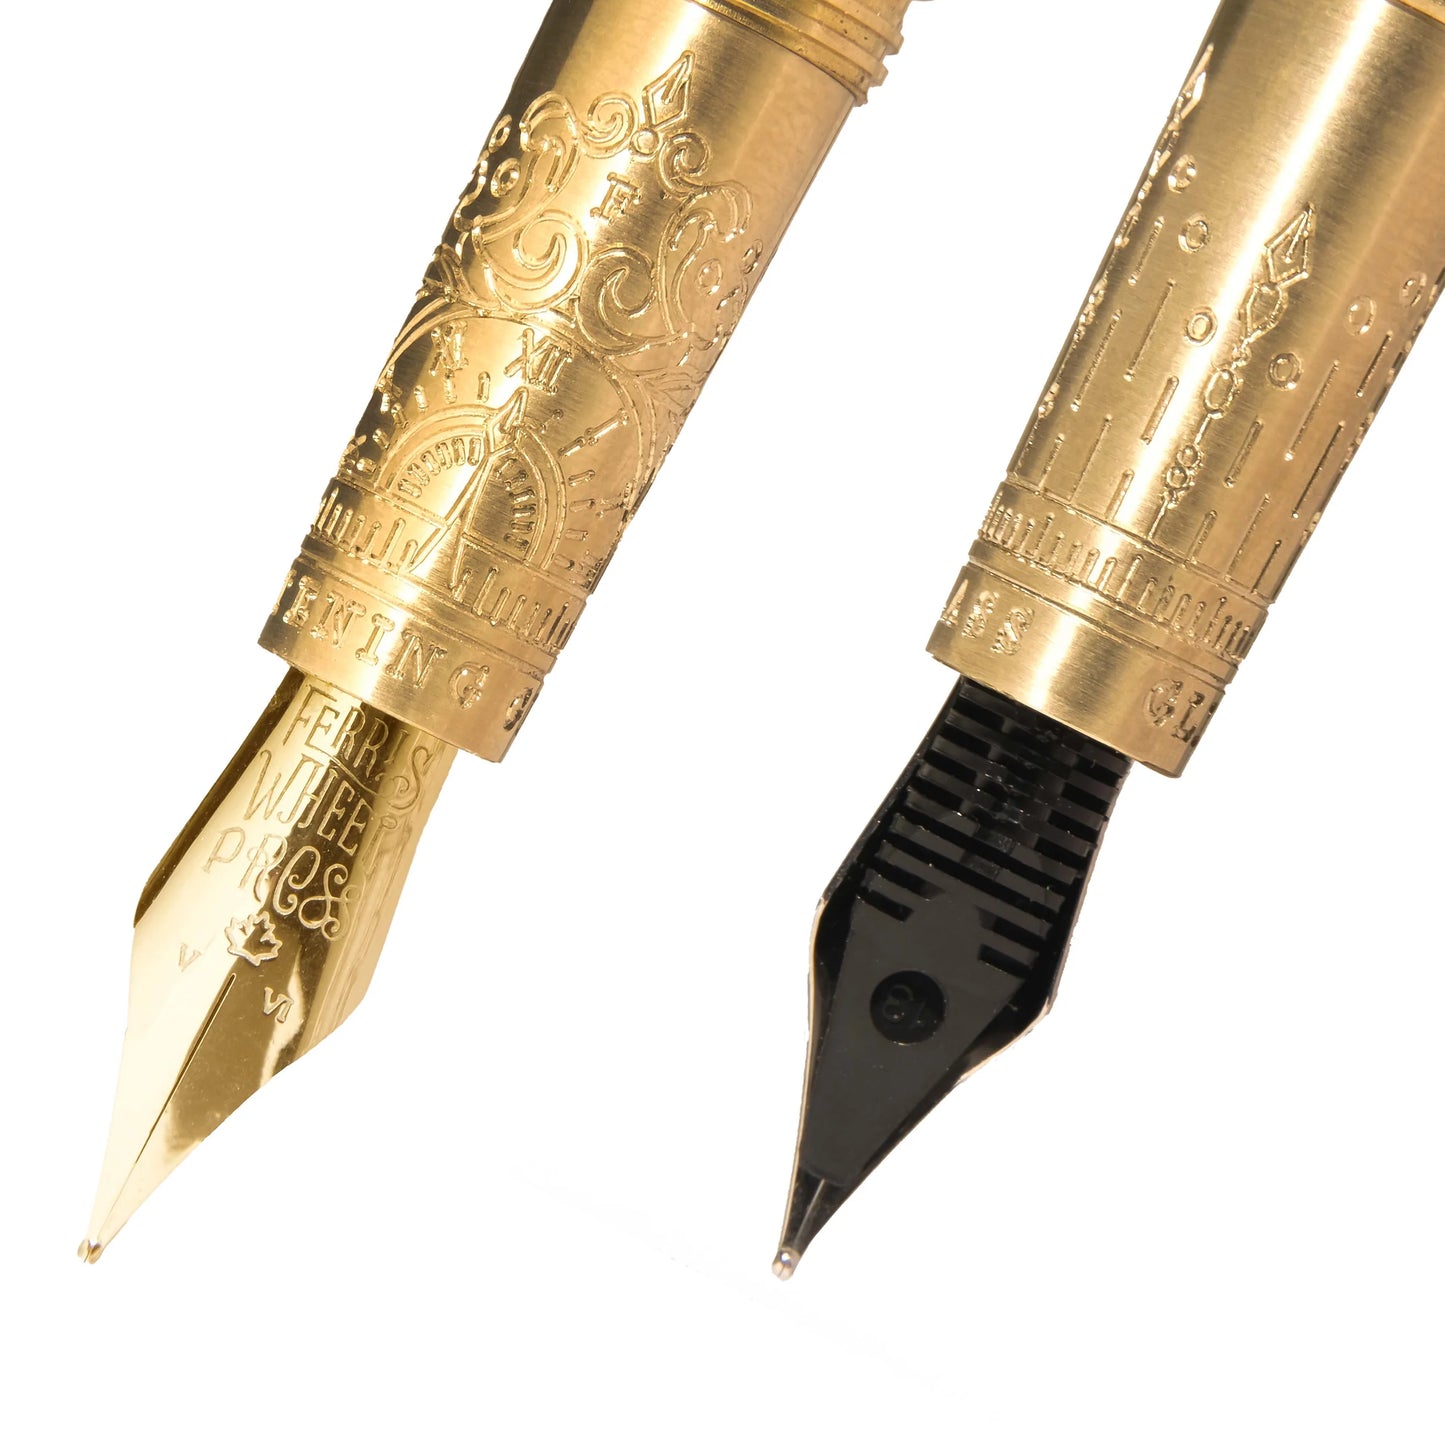 Ferris Wheel Press - Glistening Glass Gold Brush Fountain Pen - Limited Edition